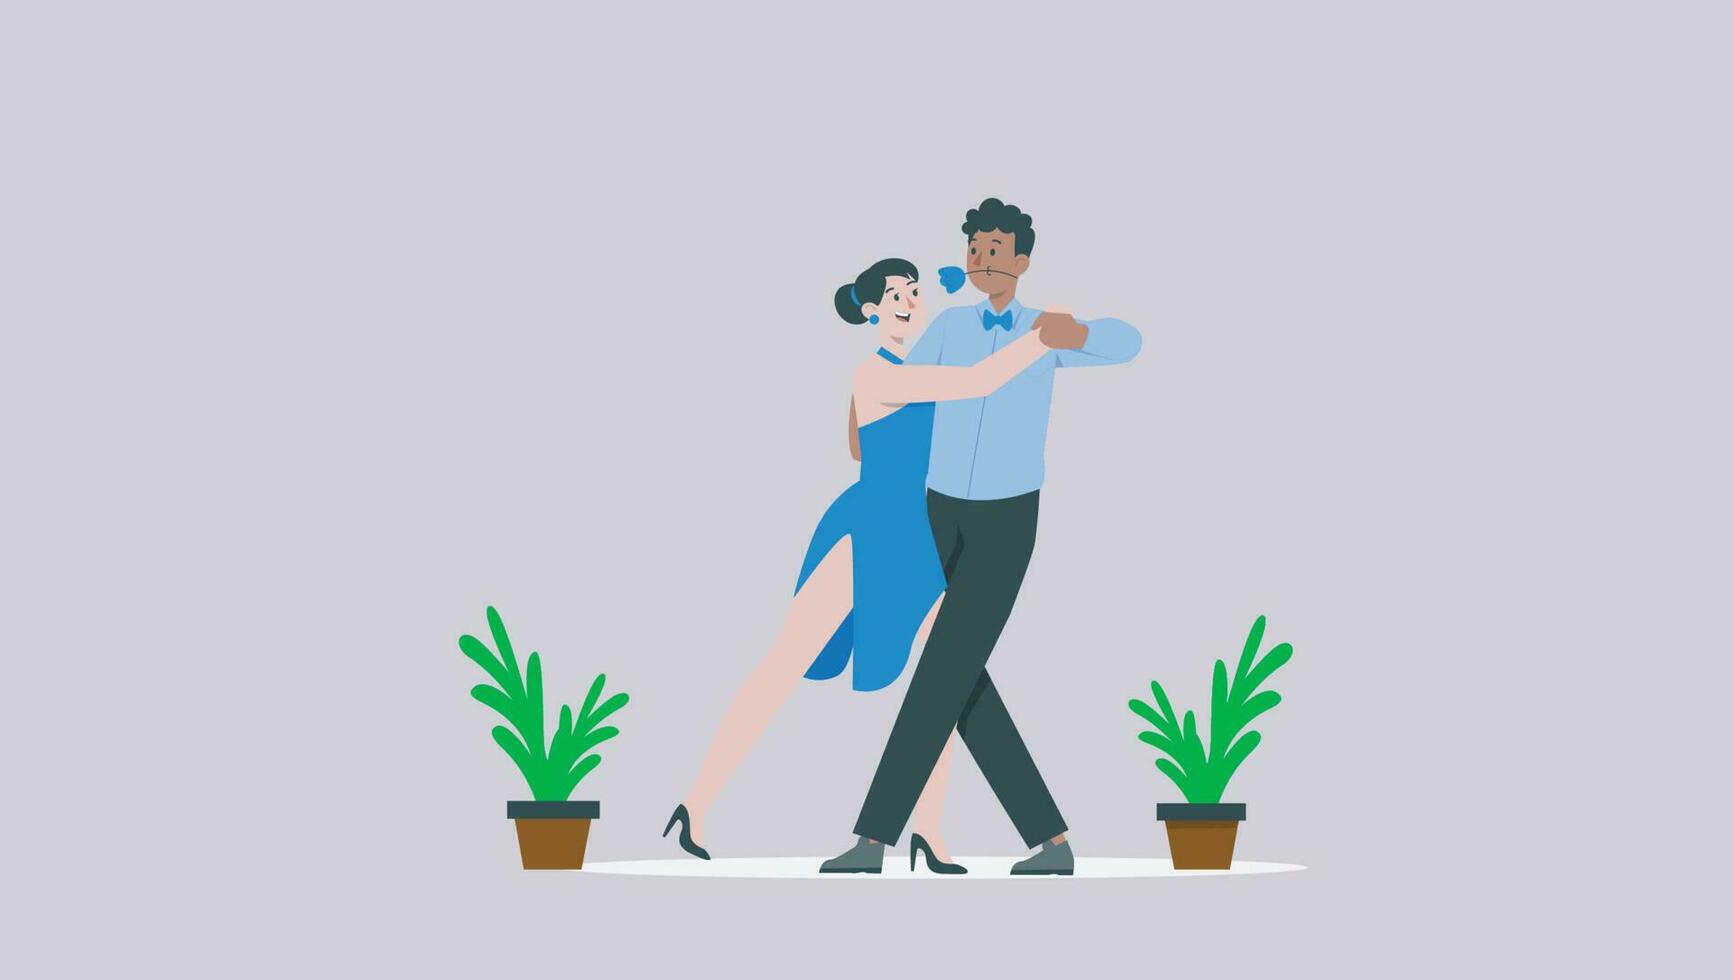 Couple dance illustration vector